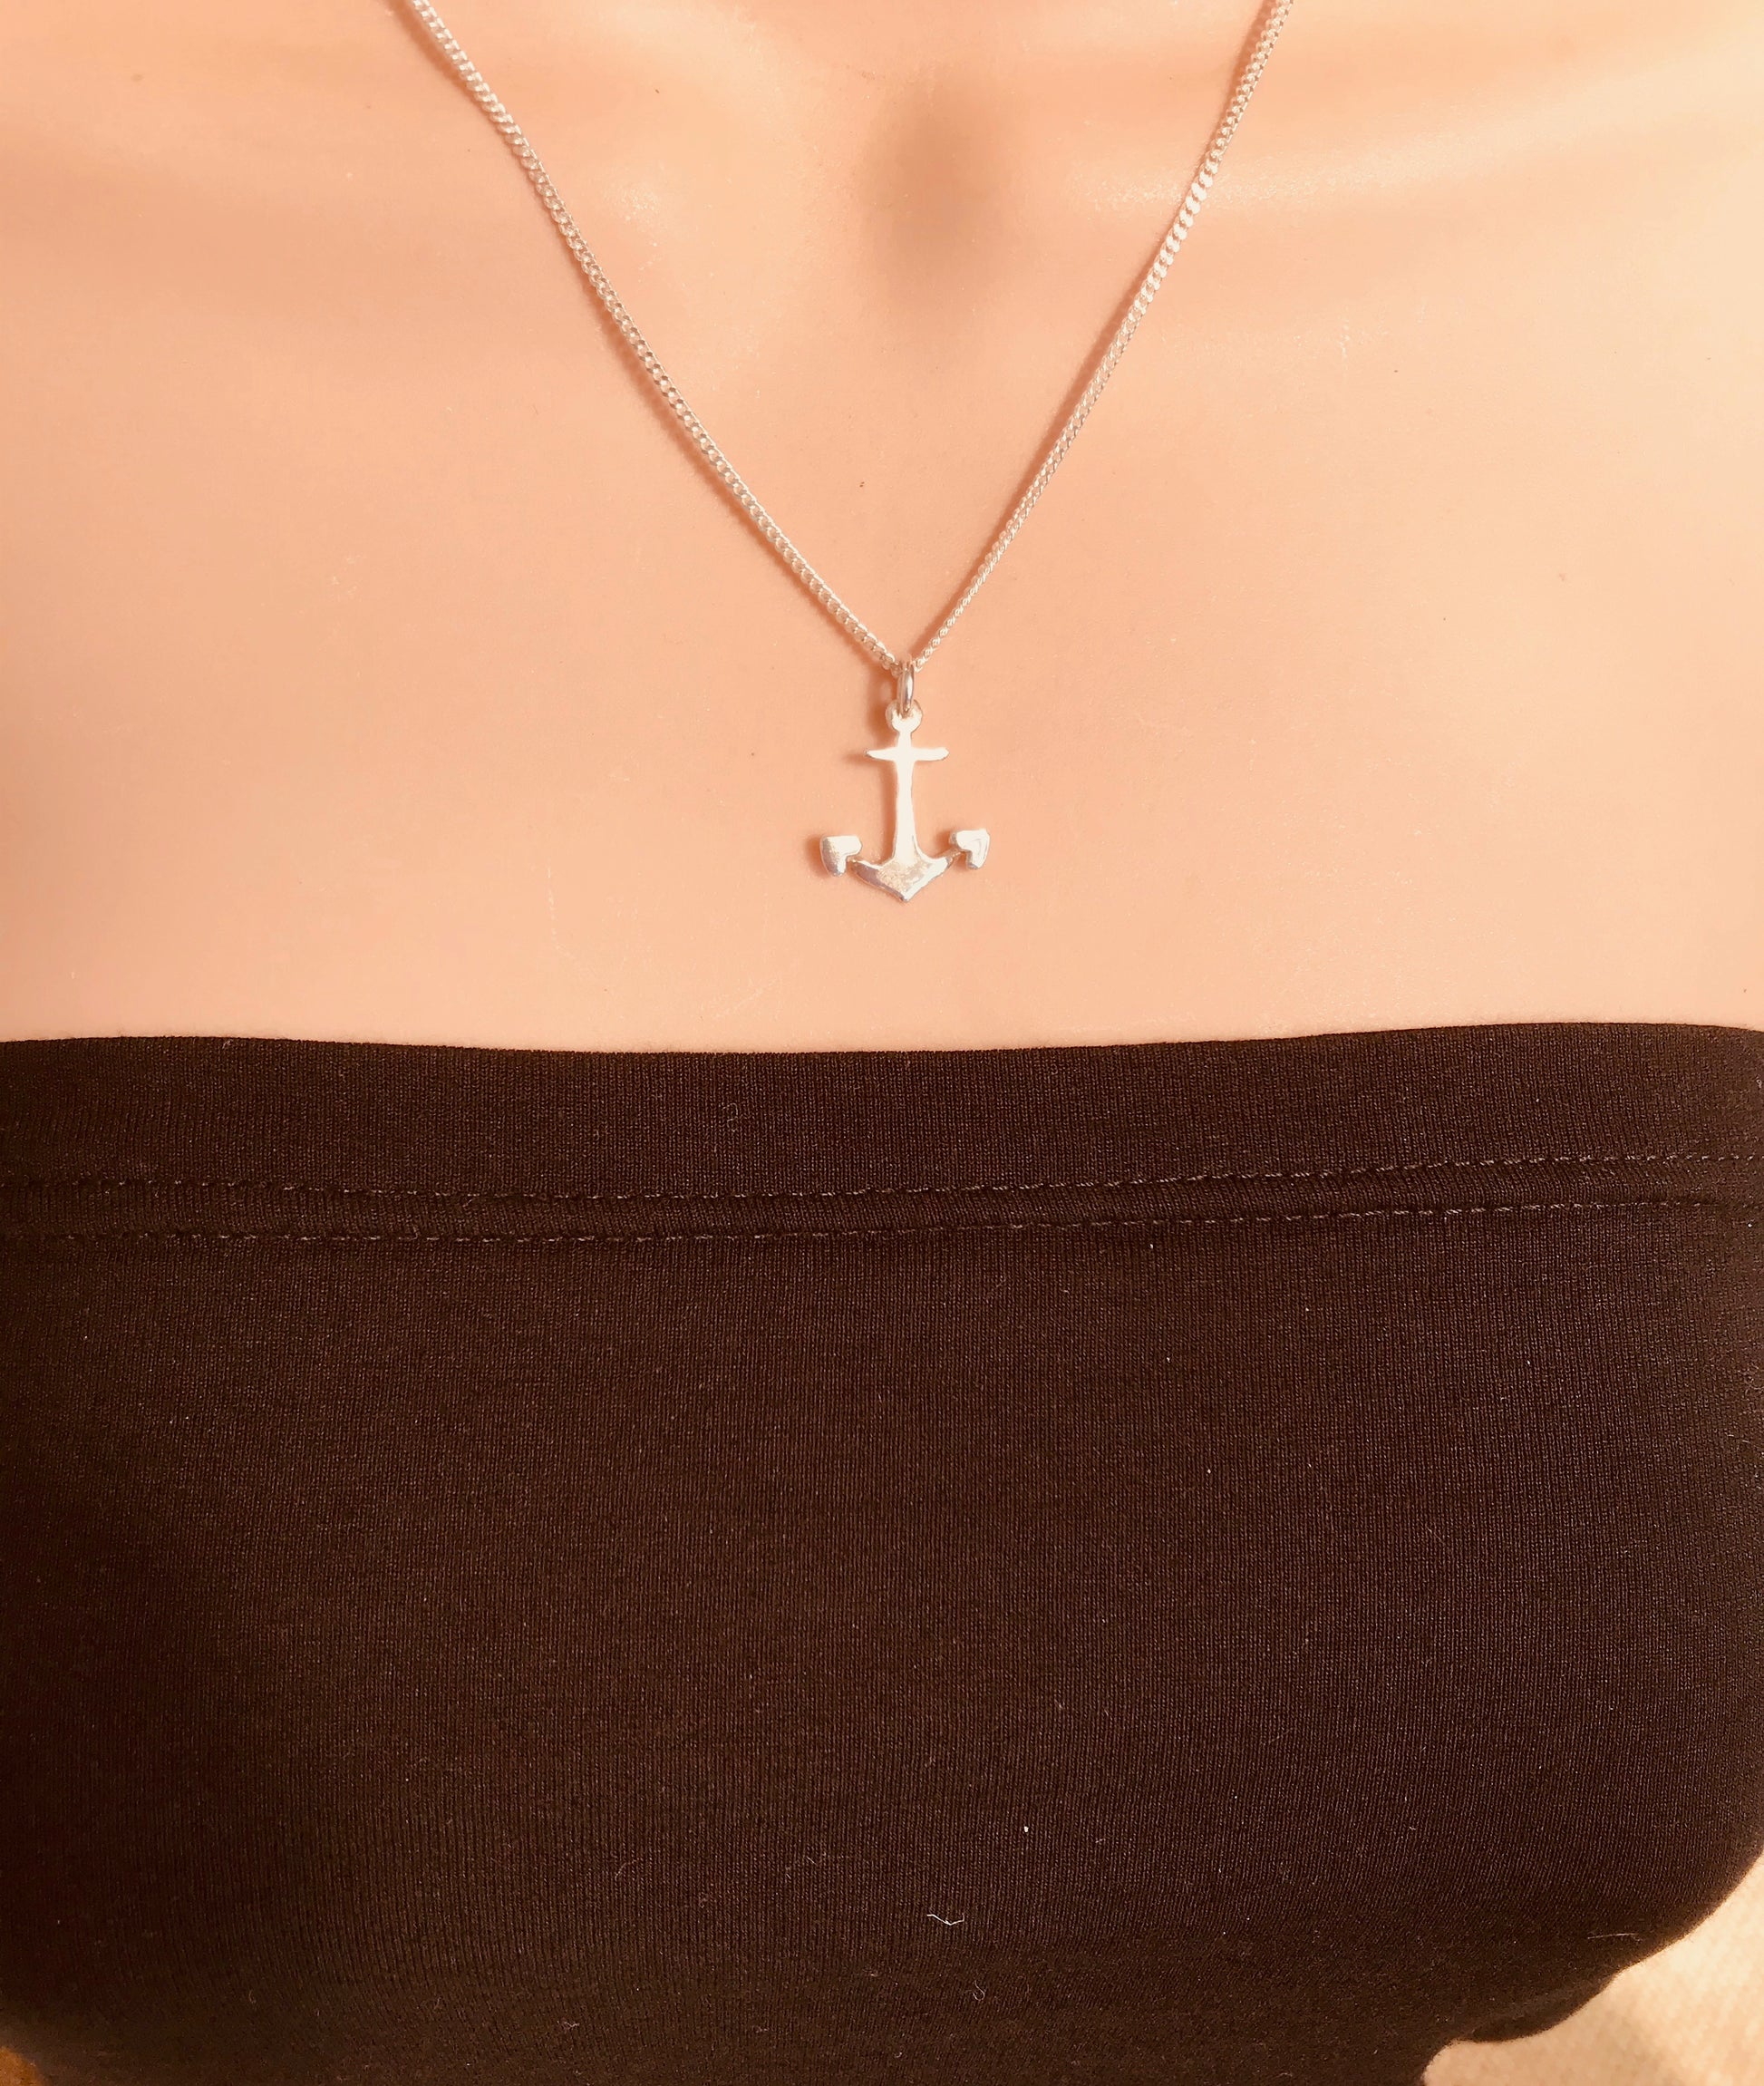 Anchor necklace heart shaped flukes